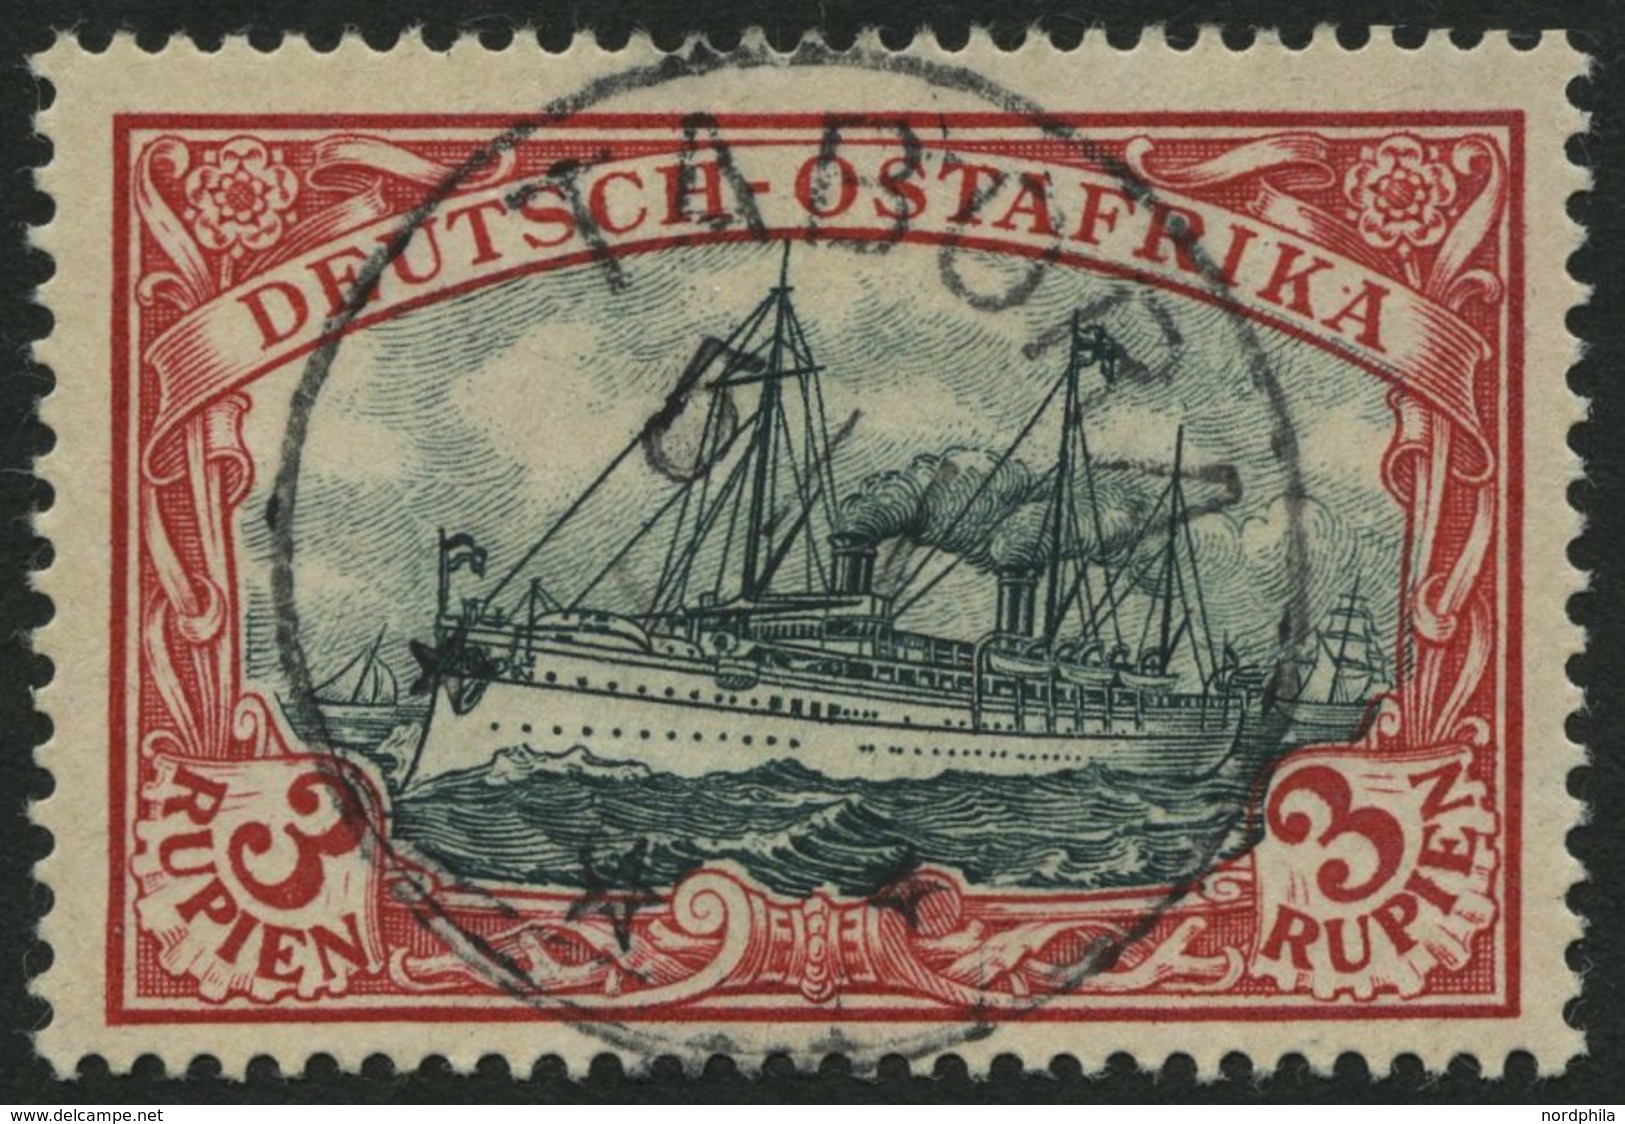 DEUTSCH-OSTAFRIKA 21b O, 1901, 3 R. Dunkelrot/grünschwarz, Ohne Wz., Stempel TABORA (ohne Jahreszahl), Pracht - German East Africa